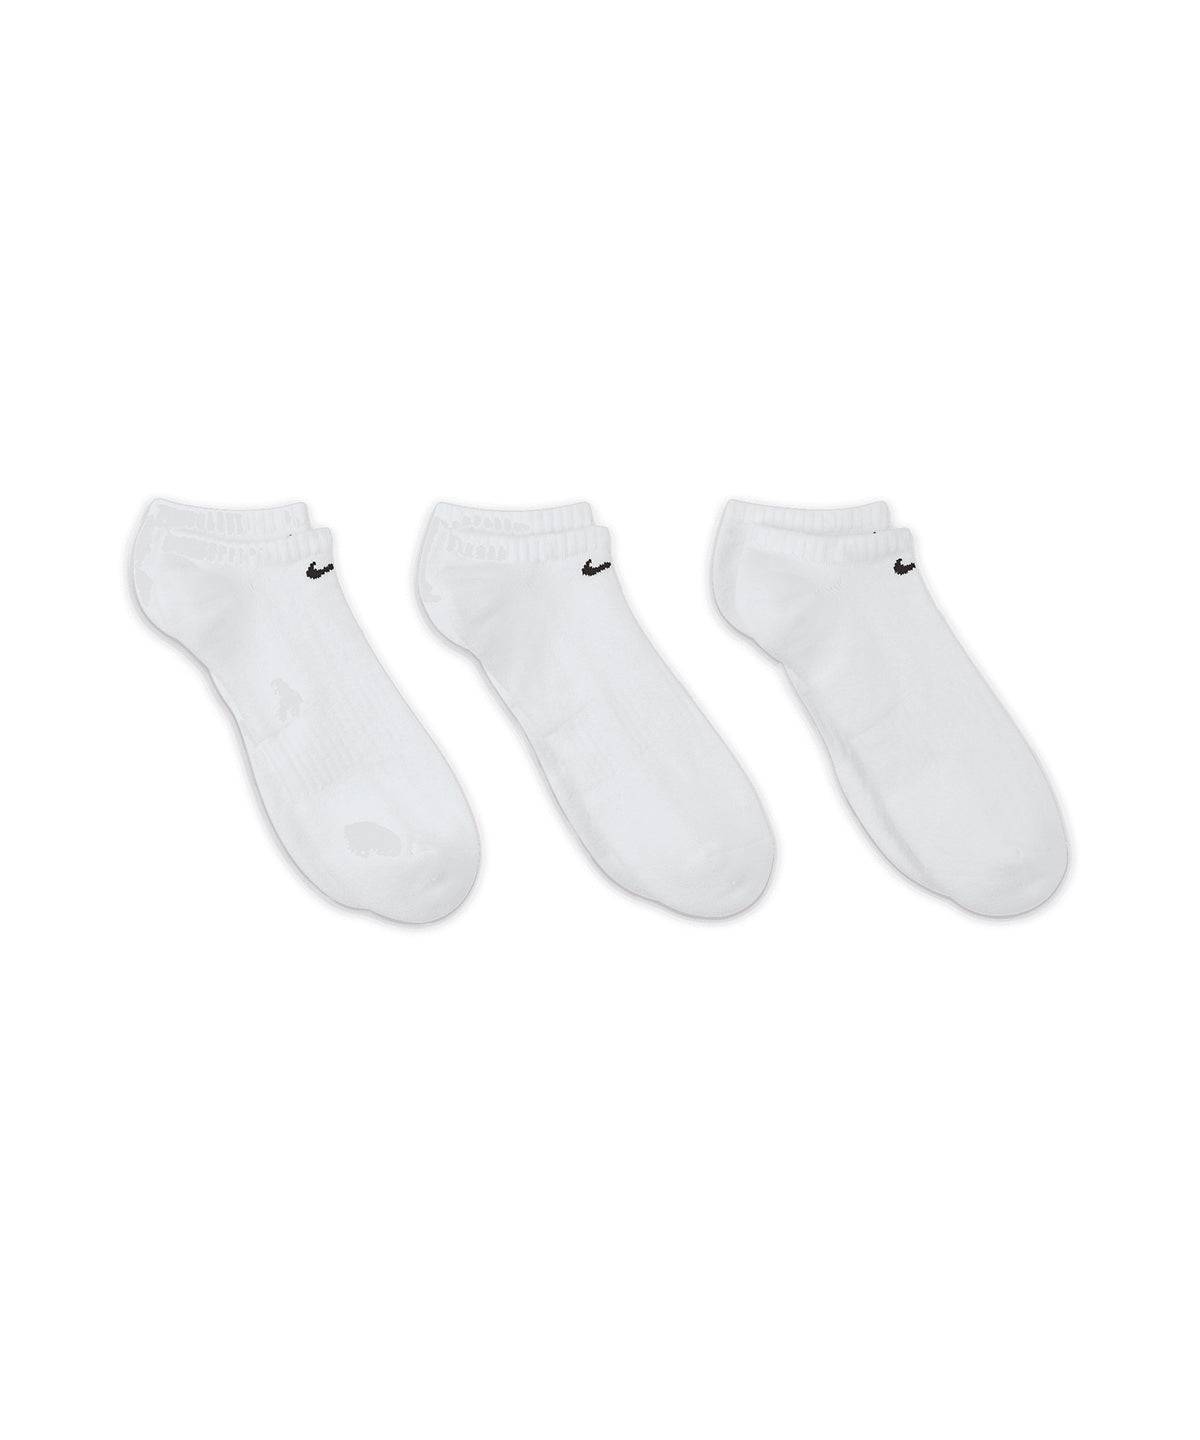 White - Nike everyday cushioned no show socks (3 pairs)